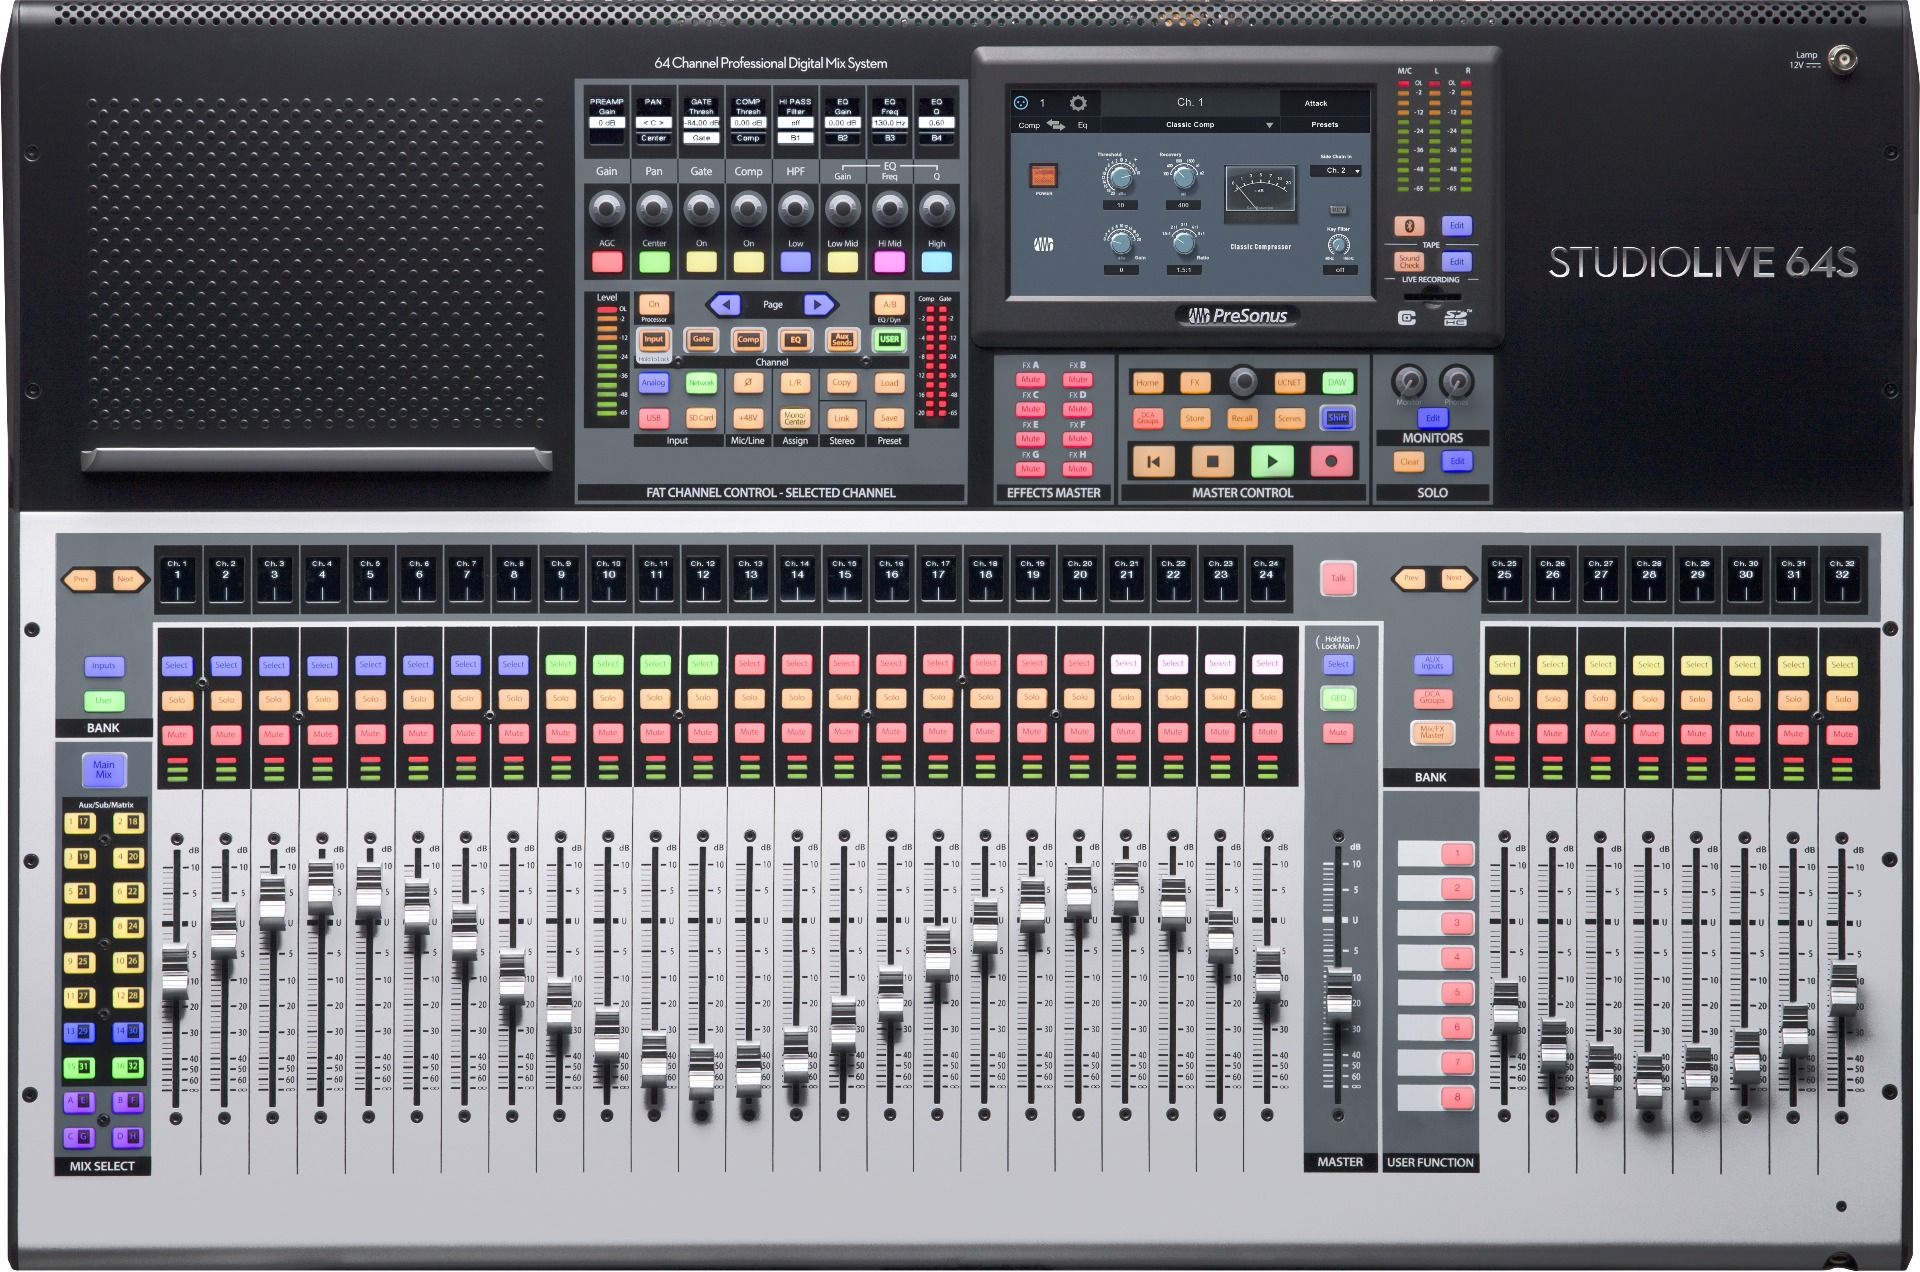 PreSonus StudioLive 64S 64-Channel Digital Mixer